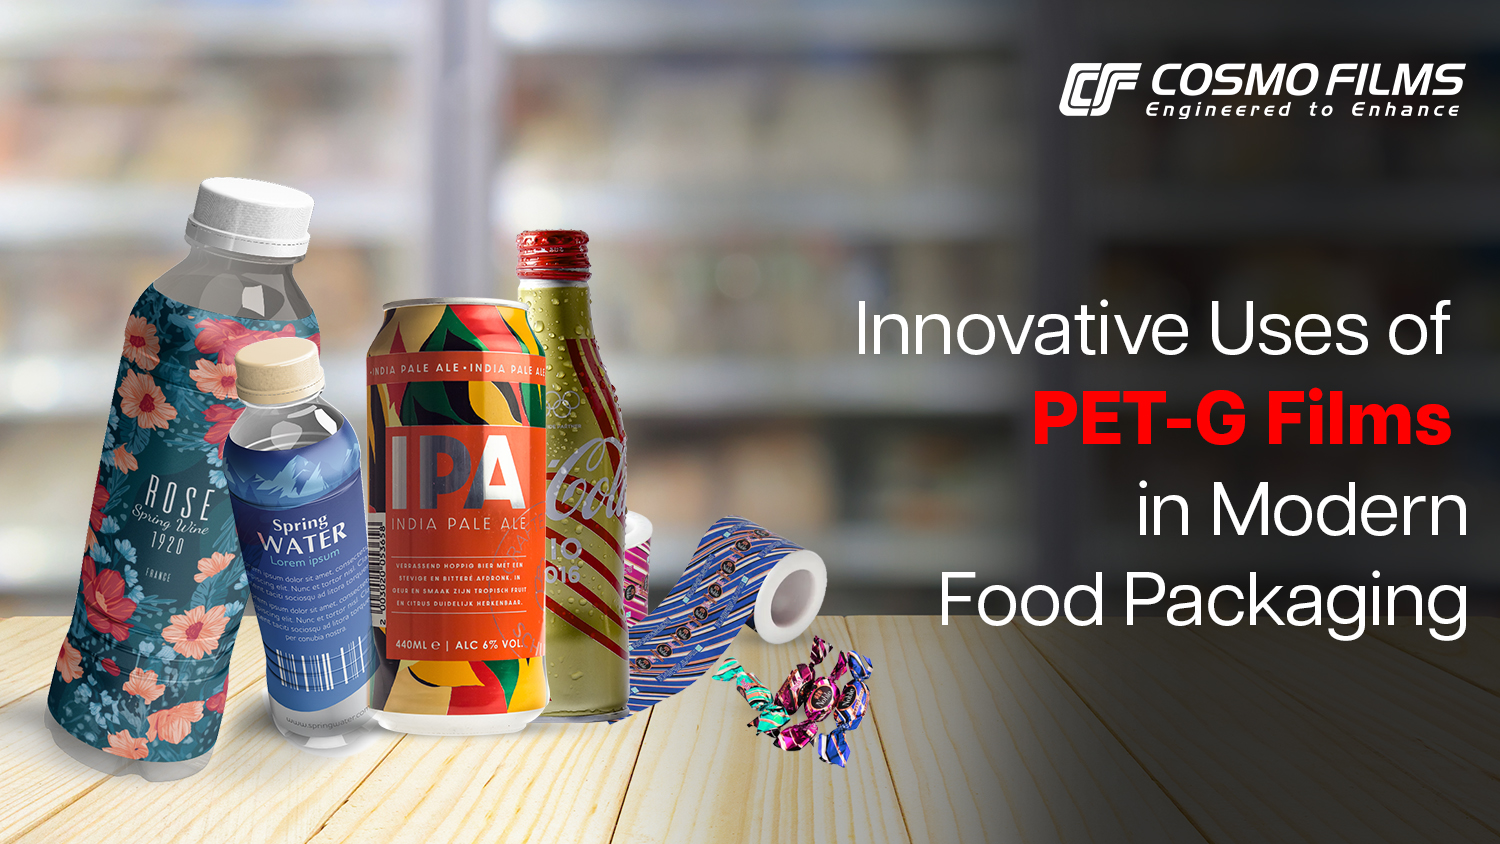 Innovative Applications of PET-G Films in Food Packaging